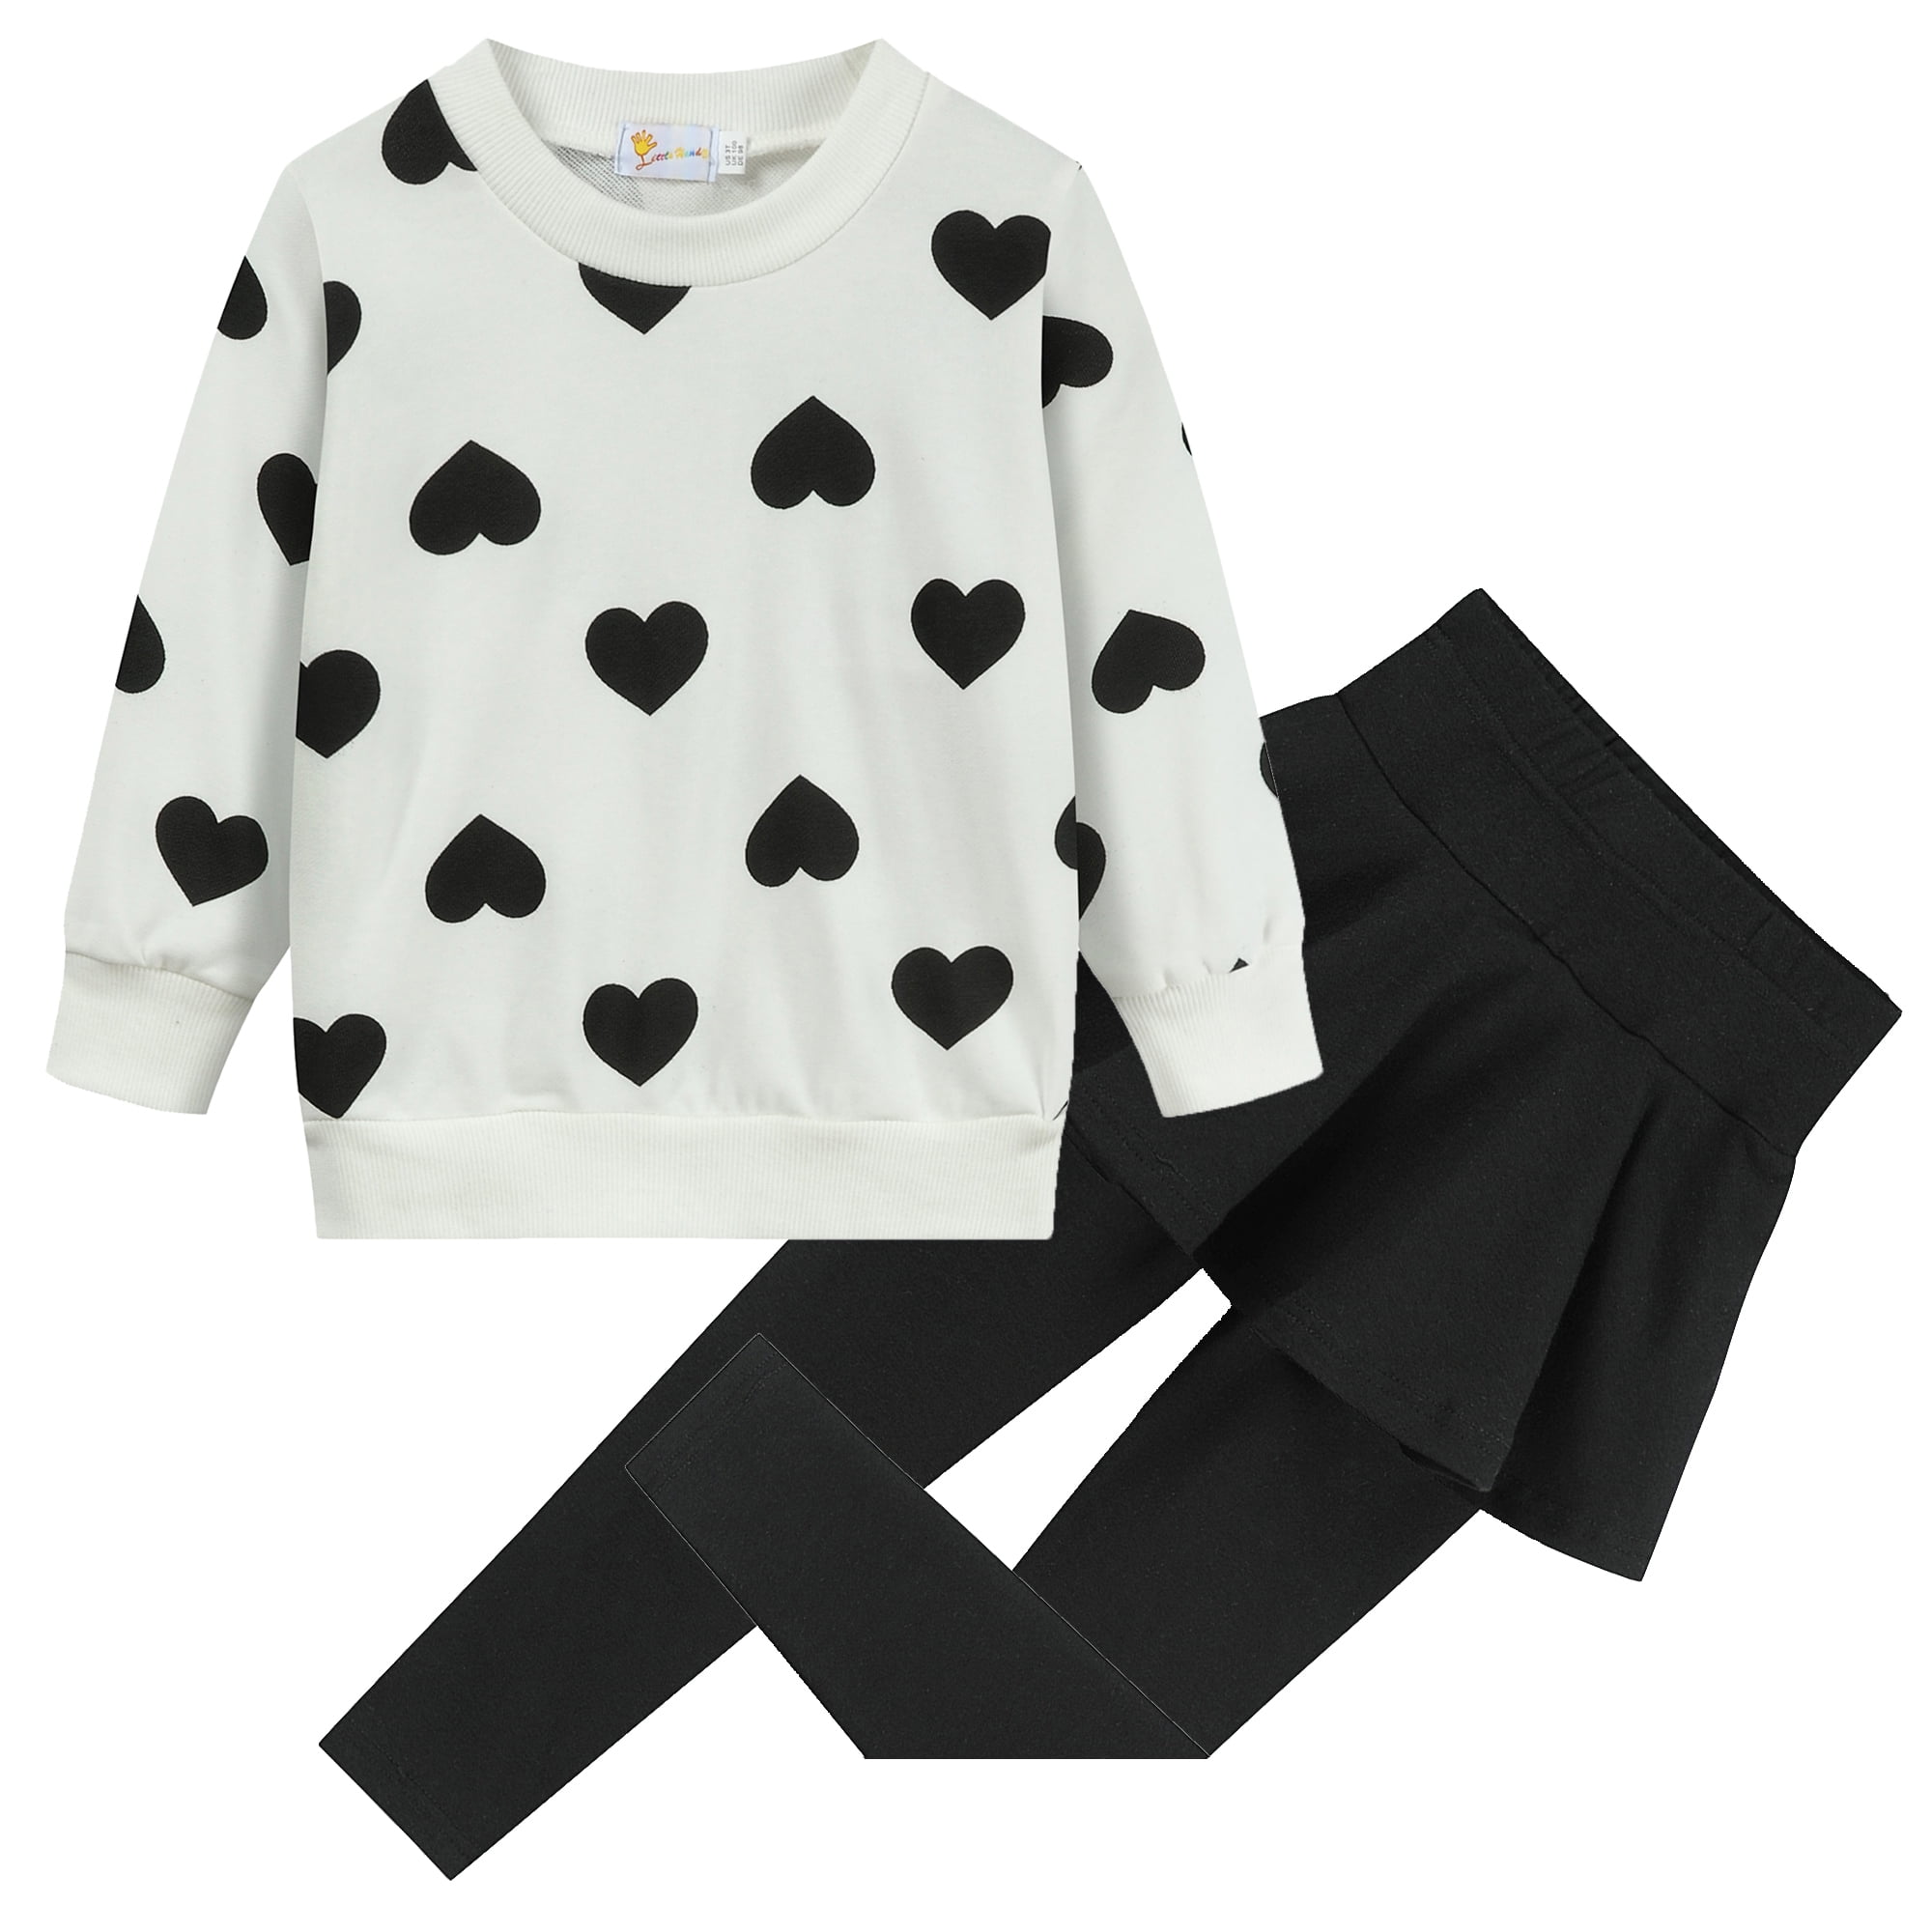 Little Hand Girl Clothes Outfit Set Sweatshirt Top & Long Pantskirts Sets  Size 8 